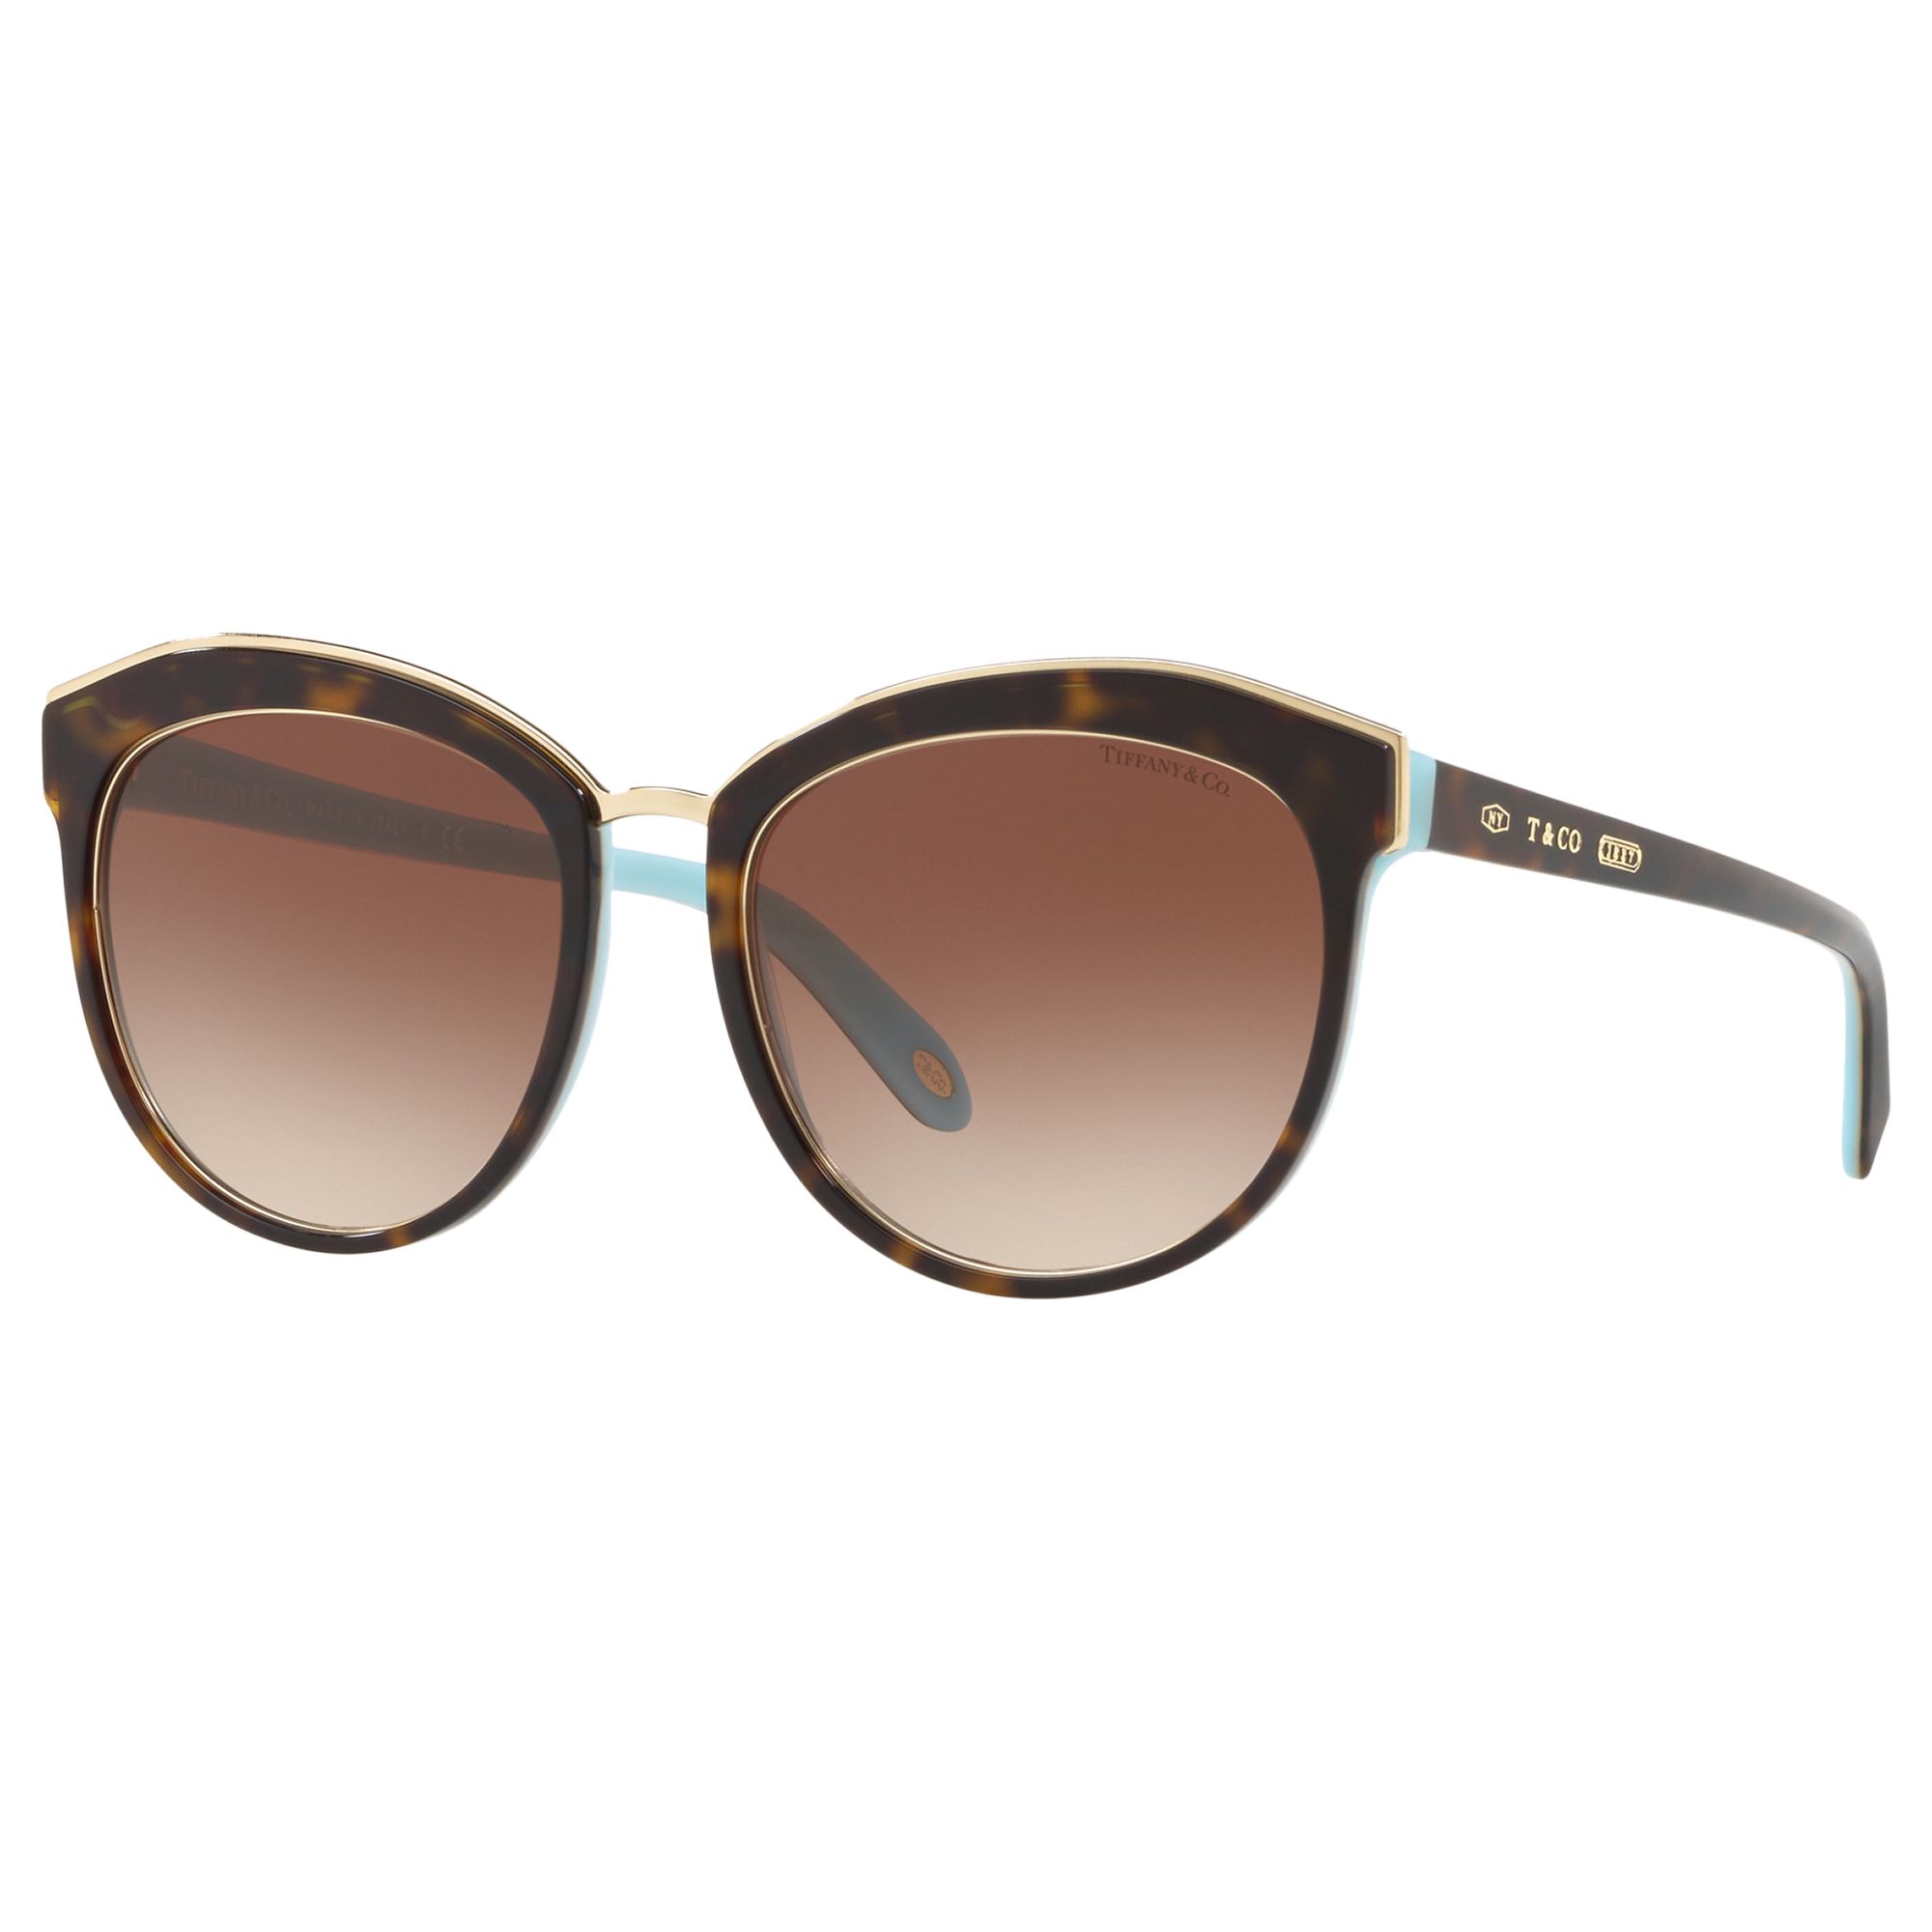 Tiffany & Co TF4146 Women's Oval Sunglasses, Tortoise/Brown Gradient